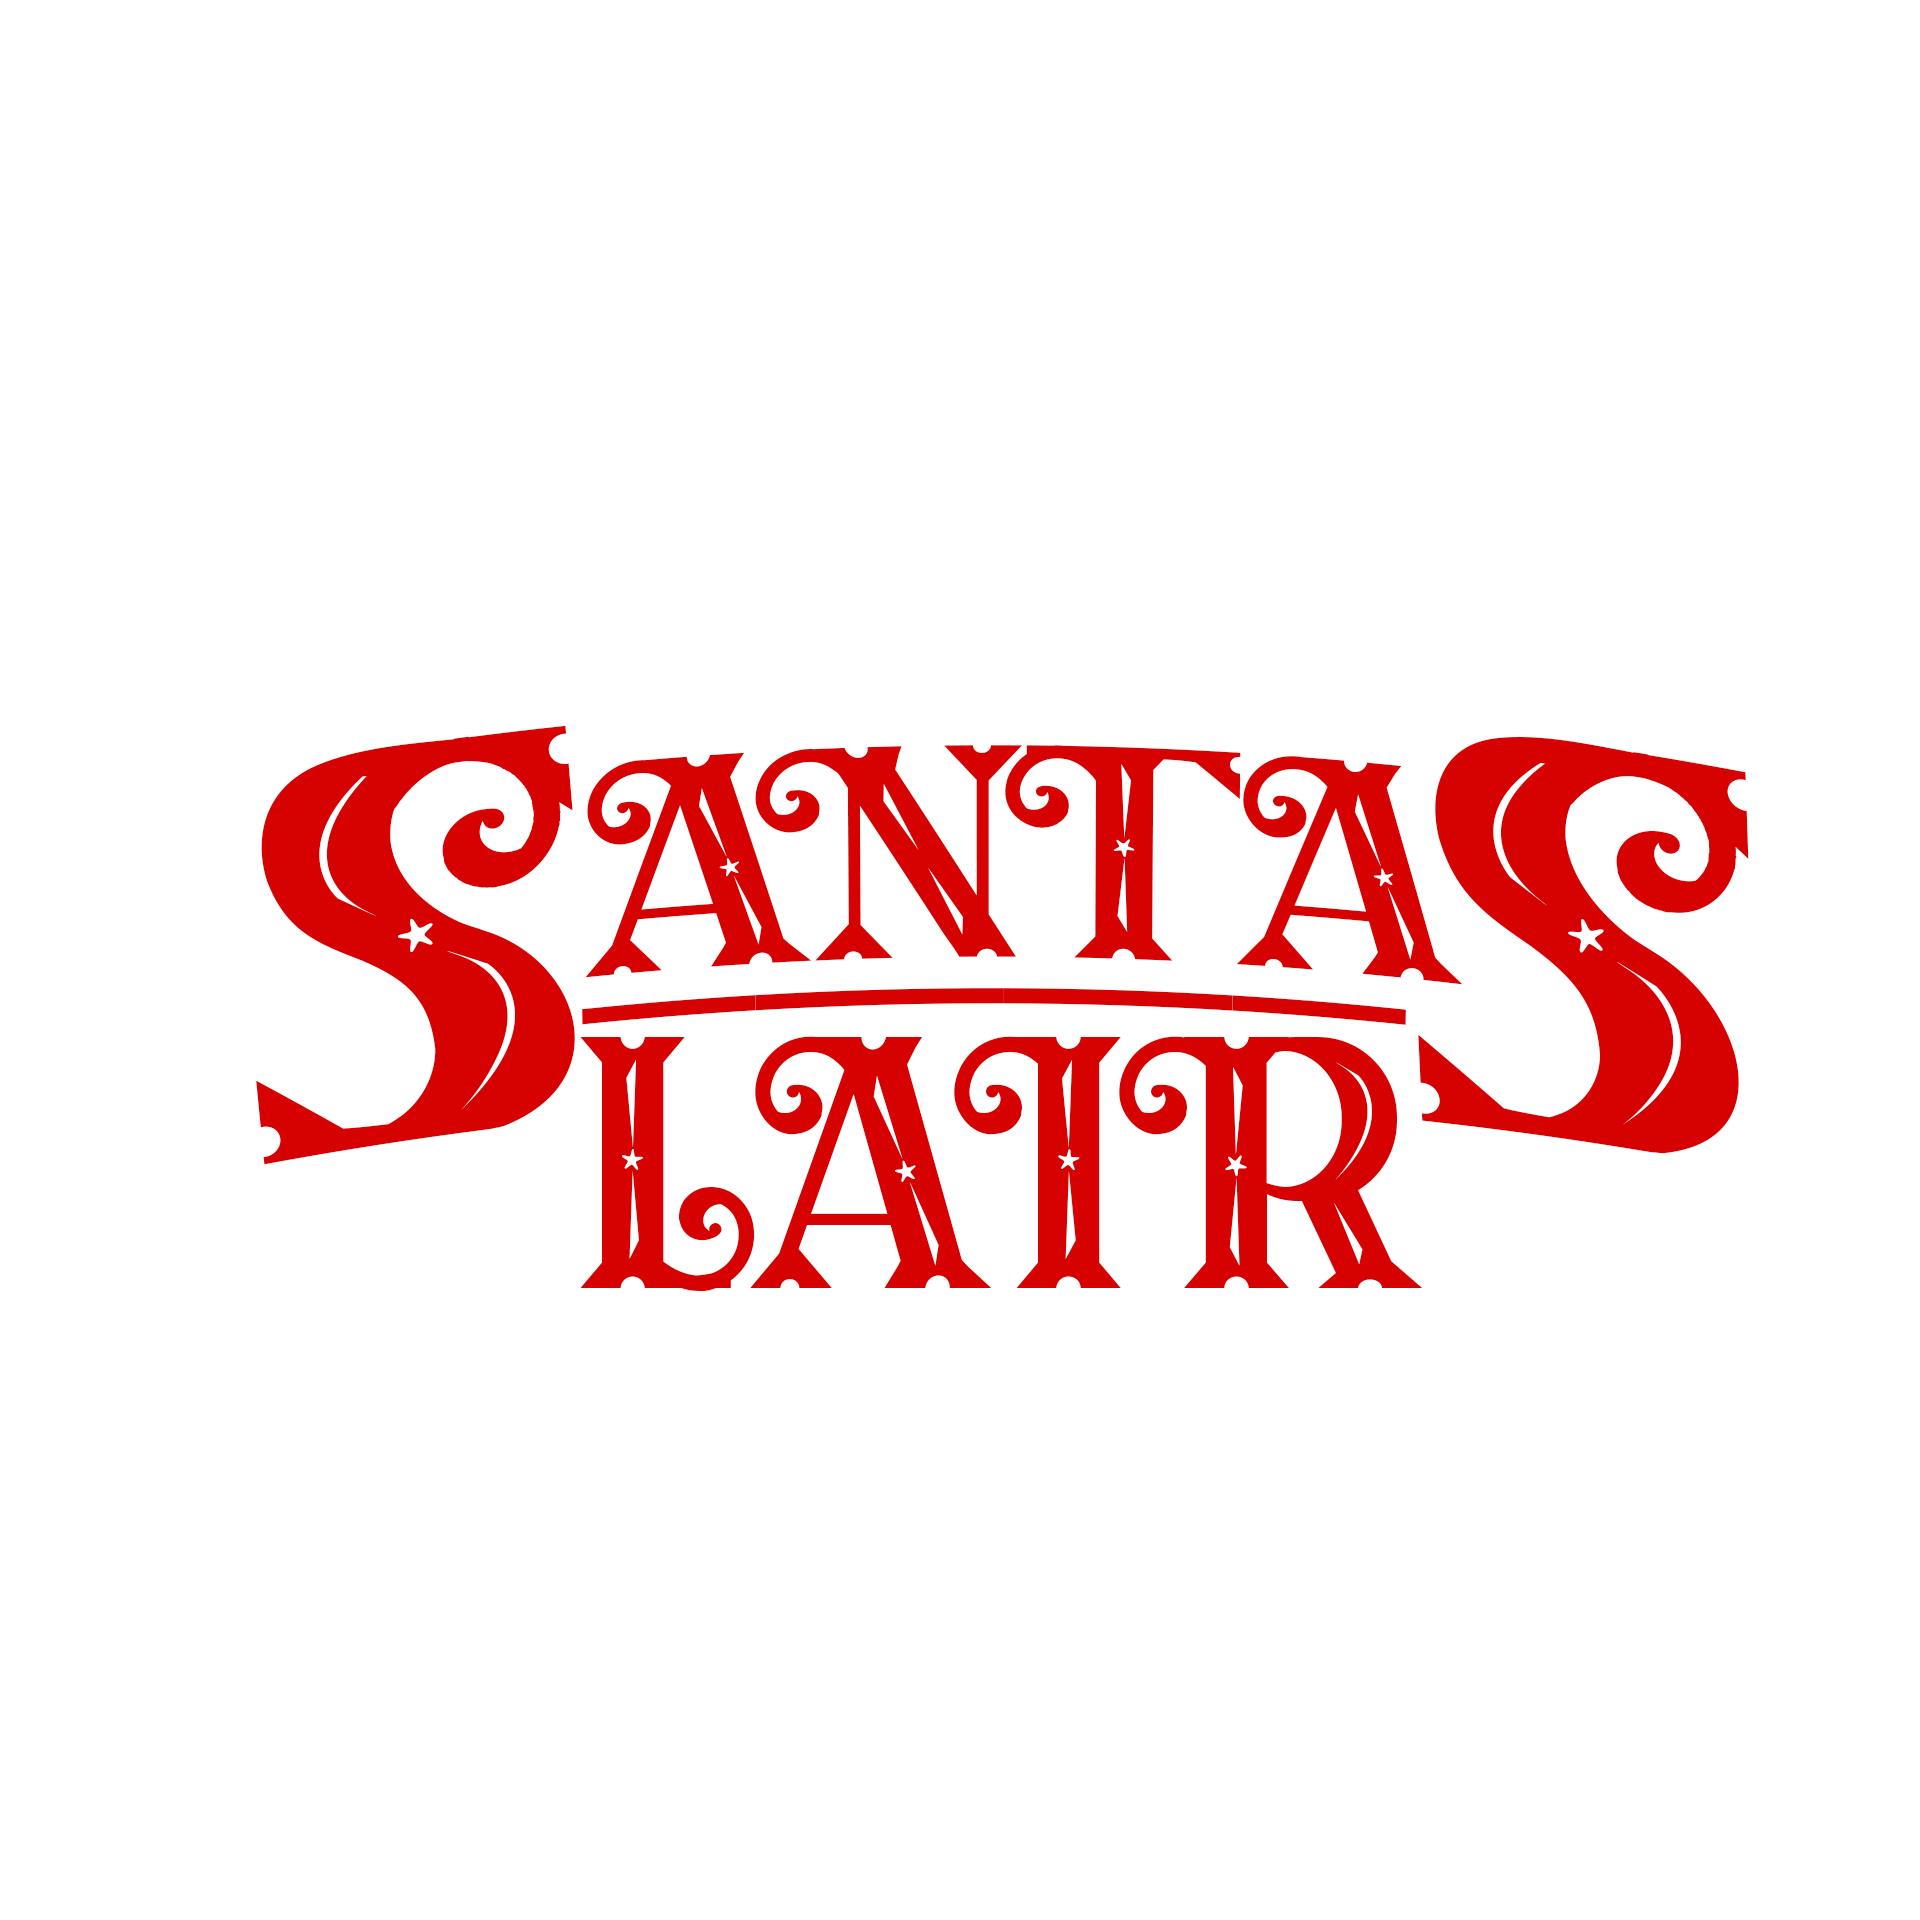 Santa's Lair by Parq: Main Image